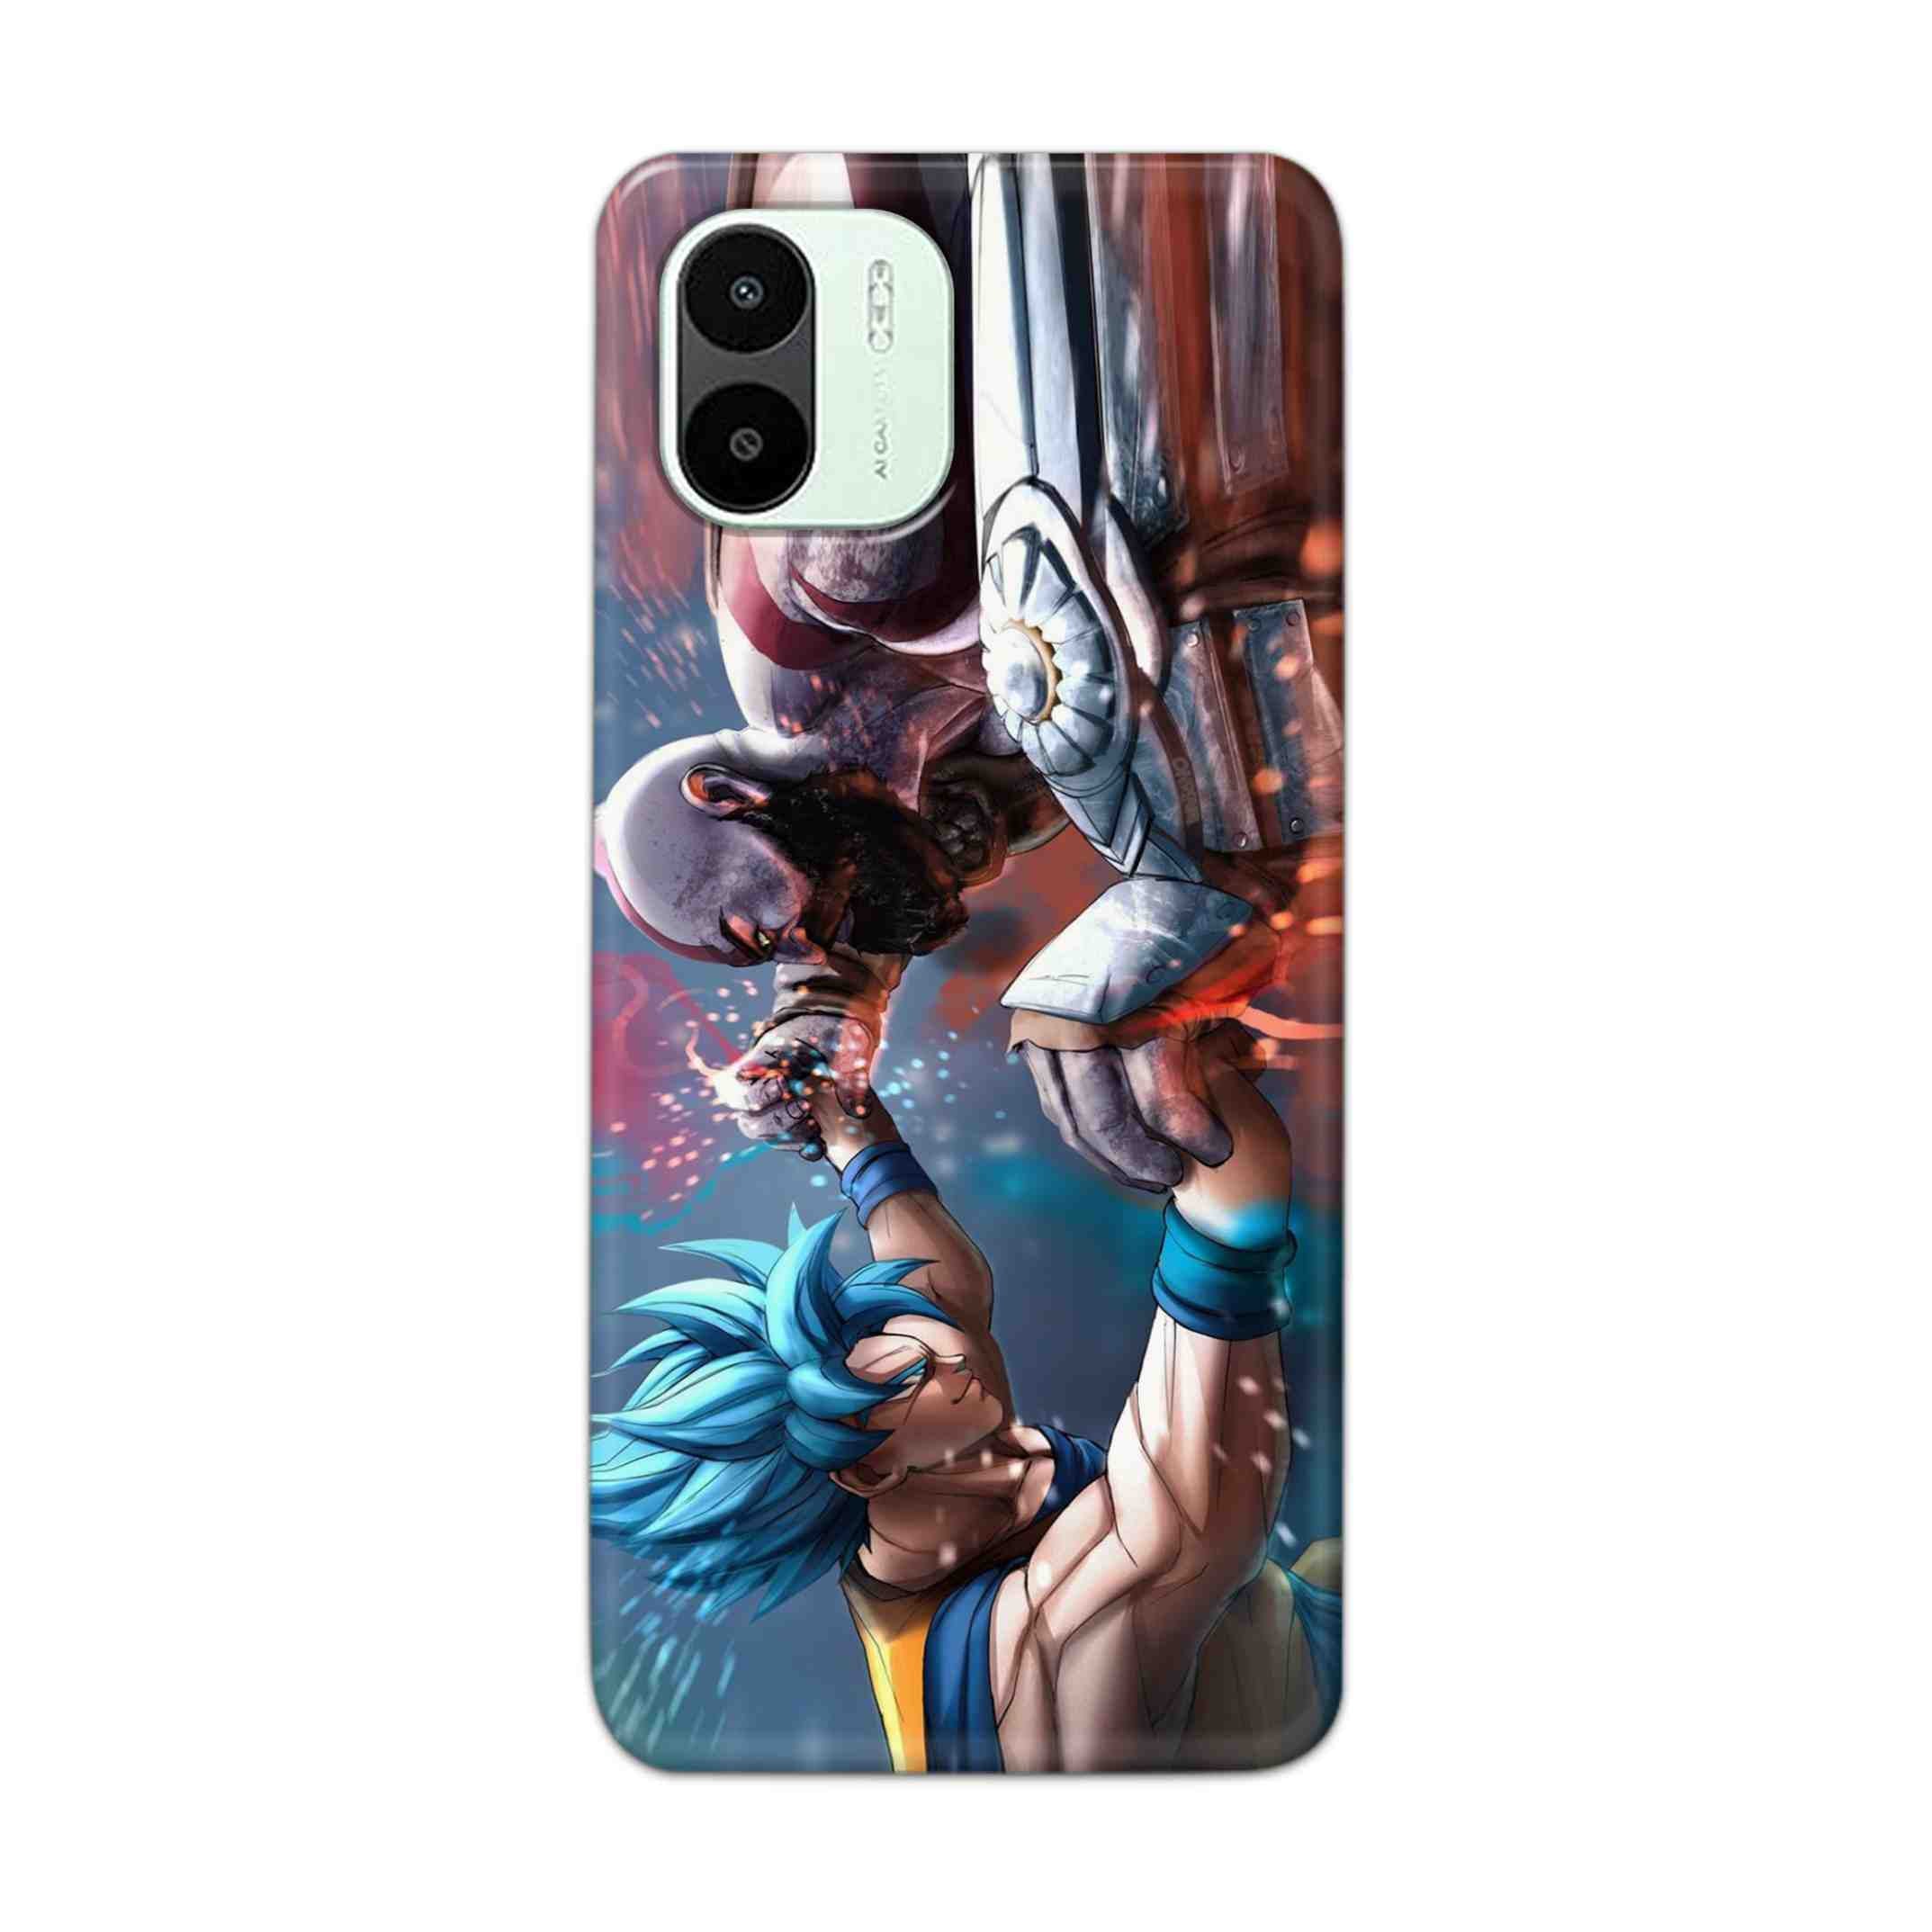 Buy Goku Vs Kratos Hard Back Mobile Phone Case Cover For Xiaomi Redmi A1 5G Online